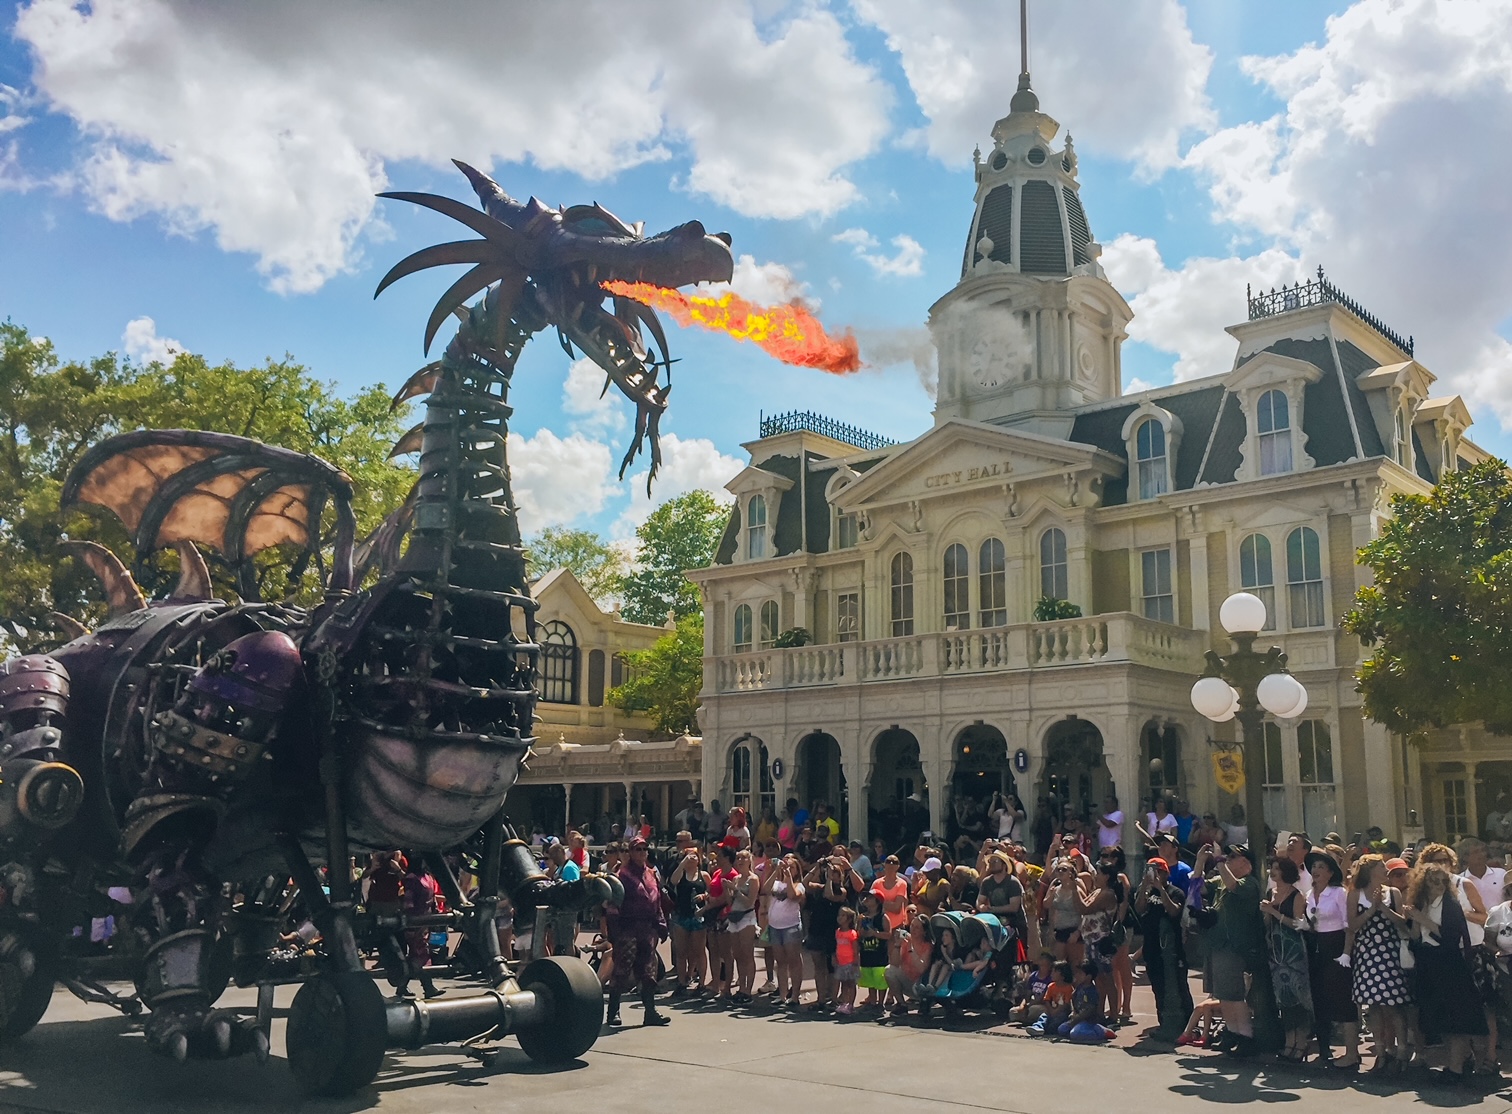 Festival of Fantasy Parade Maleficent Dragon